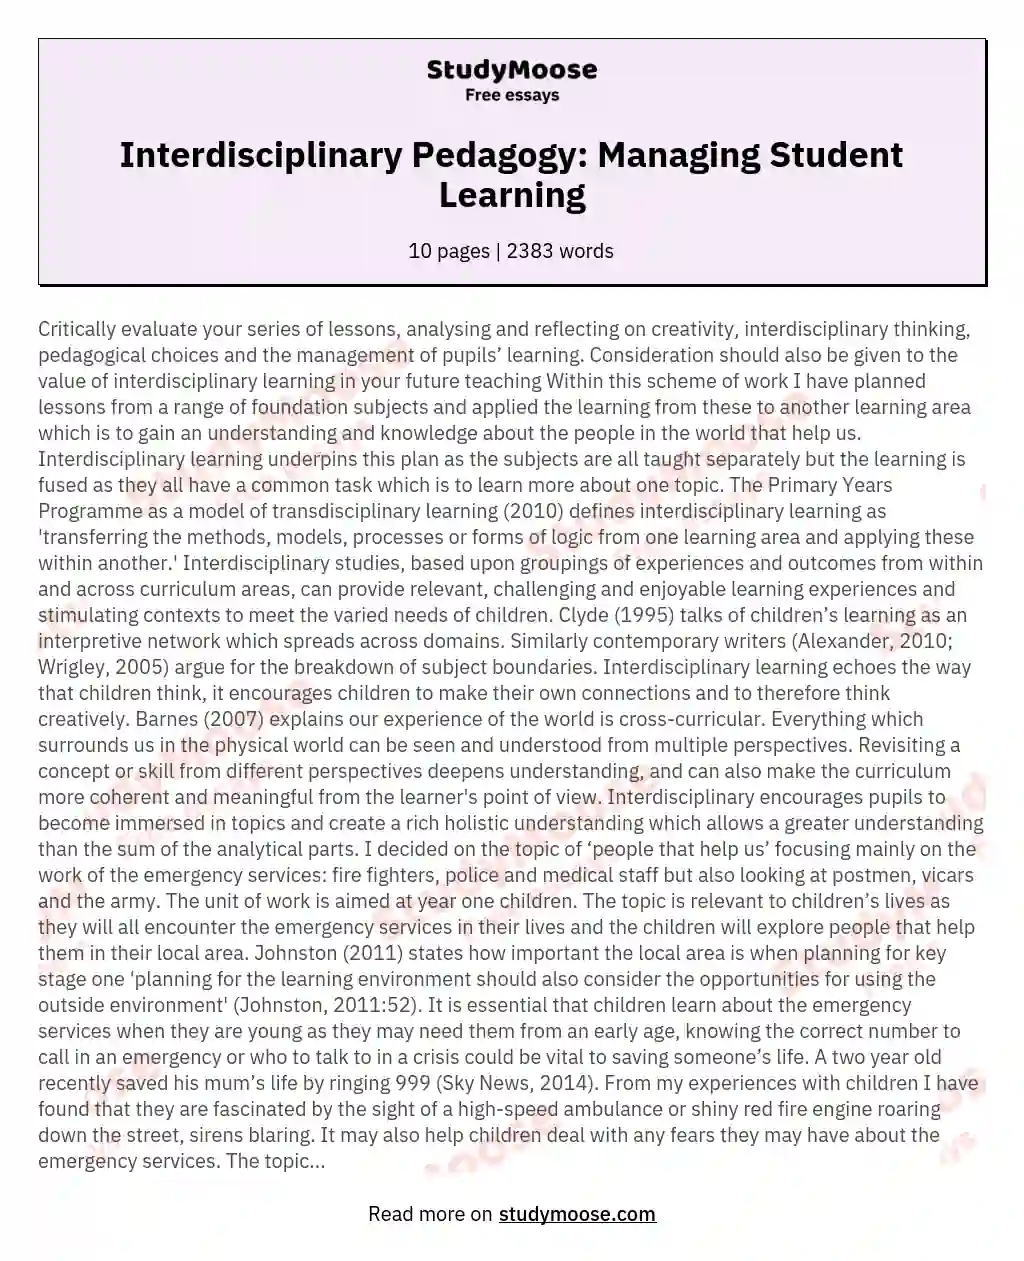 Interdisciplinary Pedagogy: Managing Student Learning essay